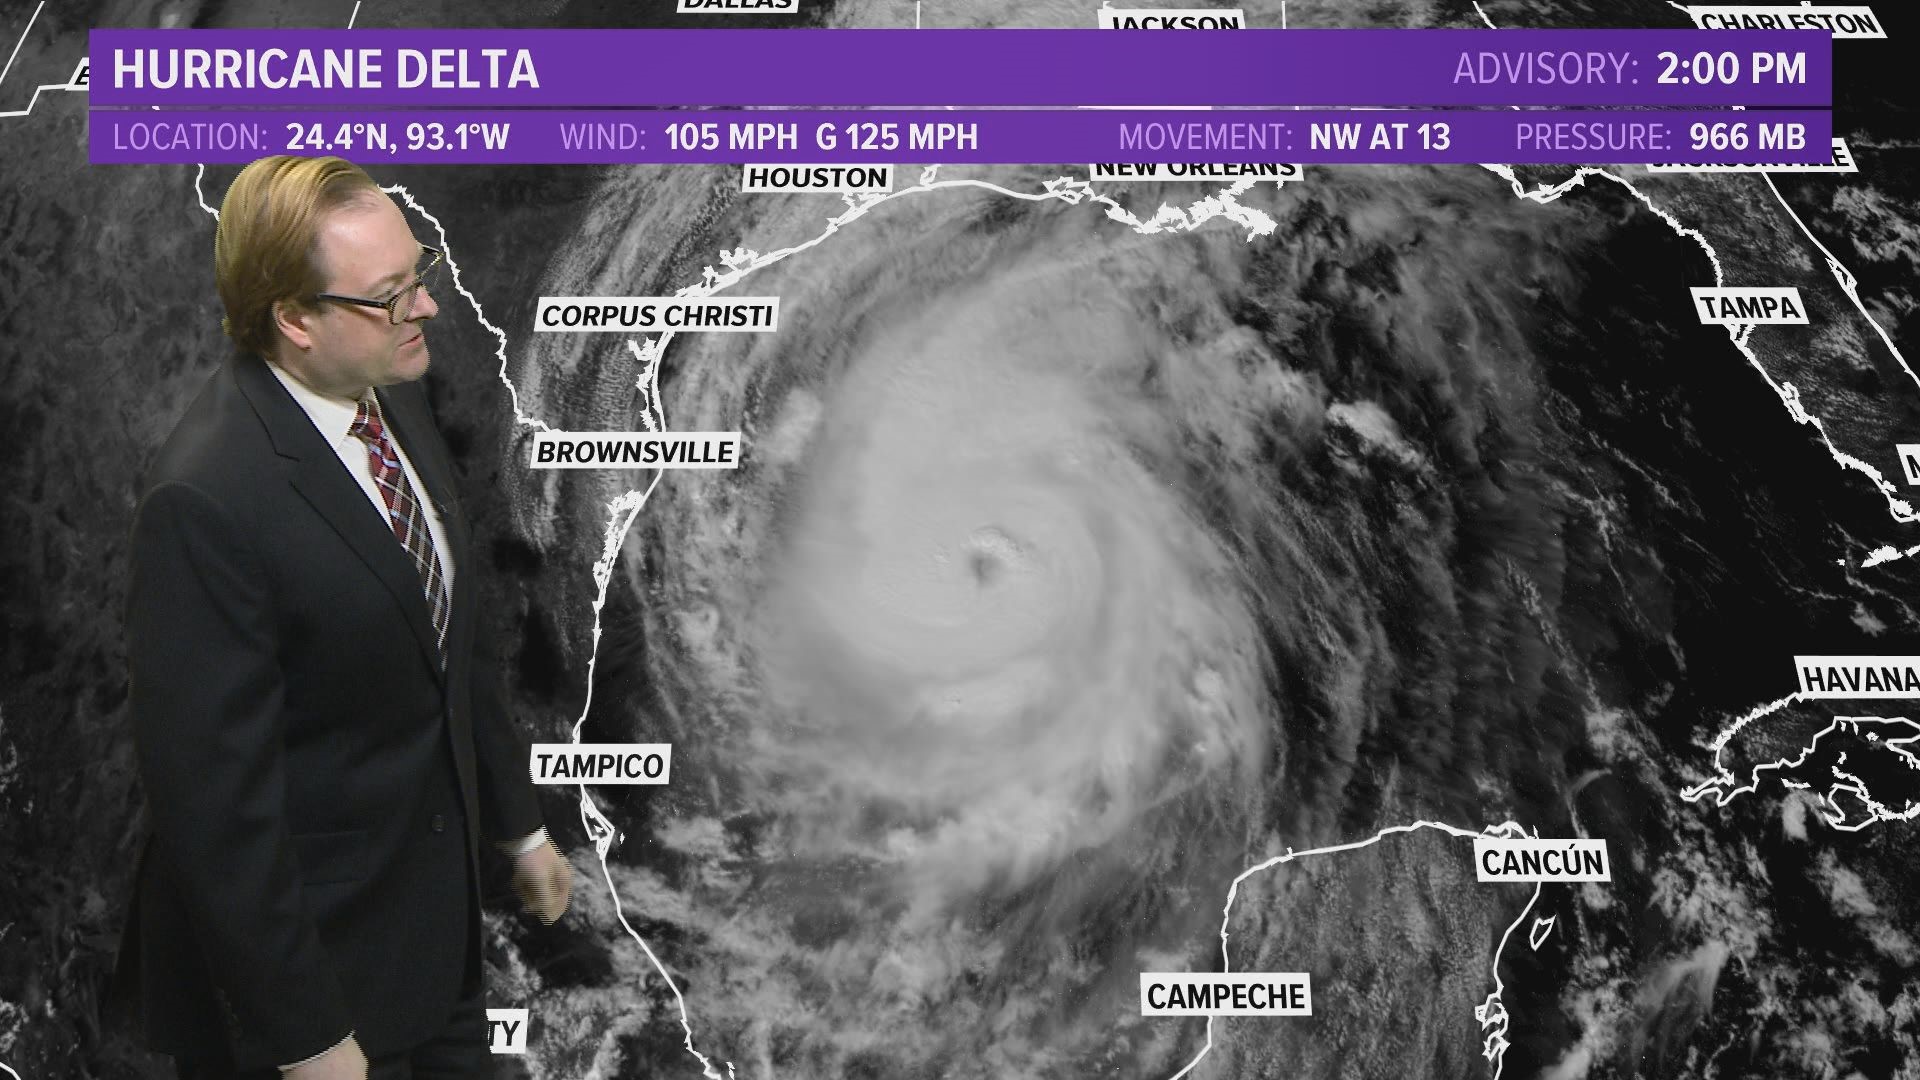 13News Now Meteorologist Evan Stewart has the latest forecast track on Hurricane Delta, which is heading toward the Louisiana coastline.